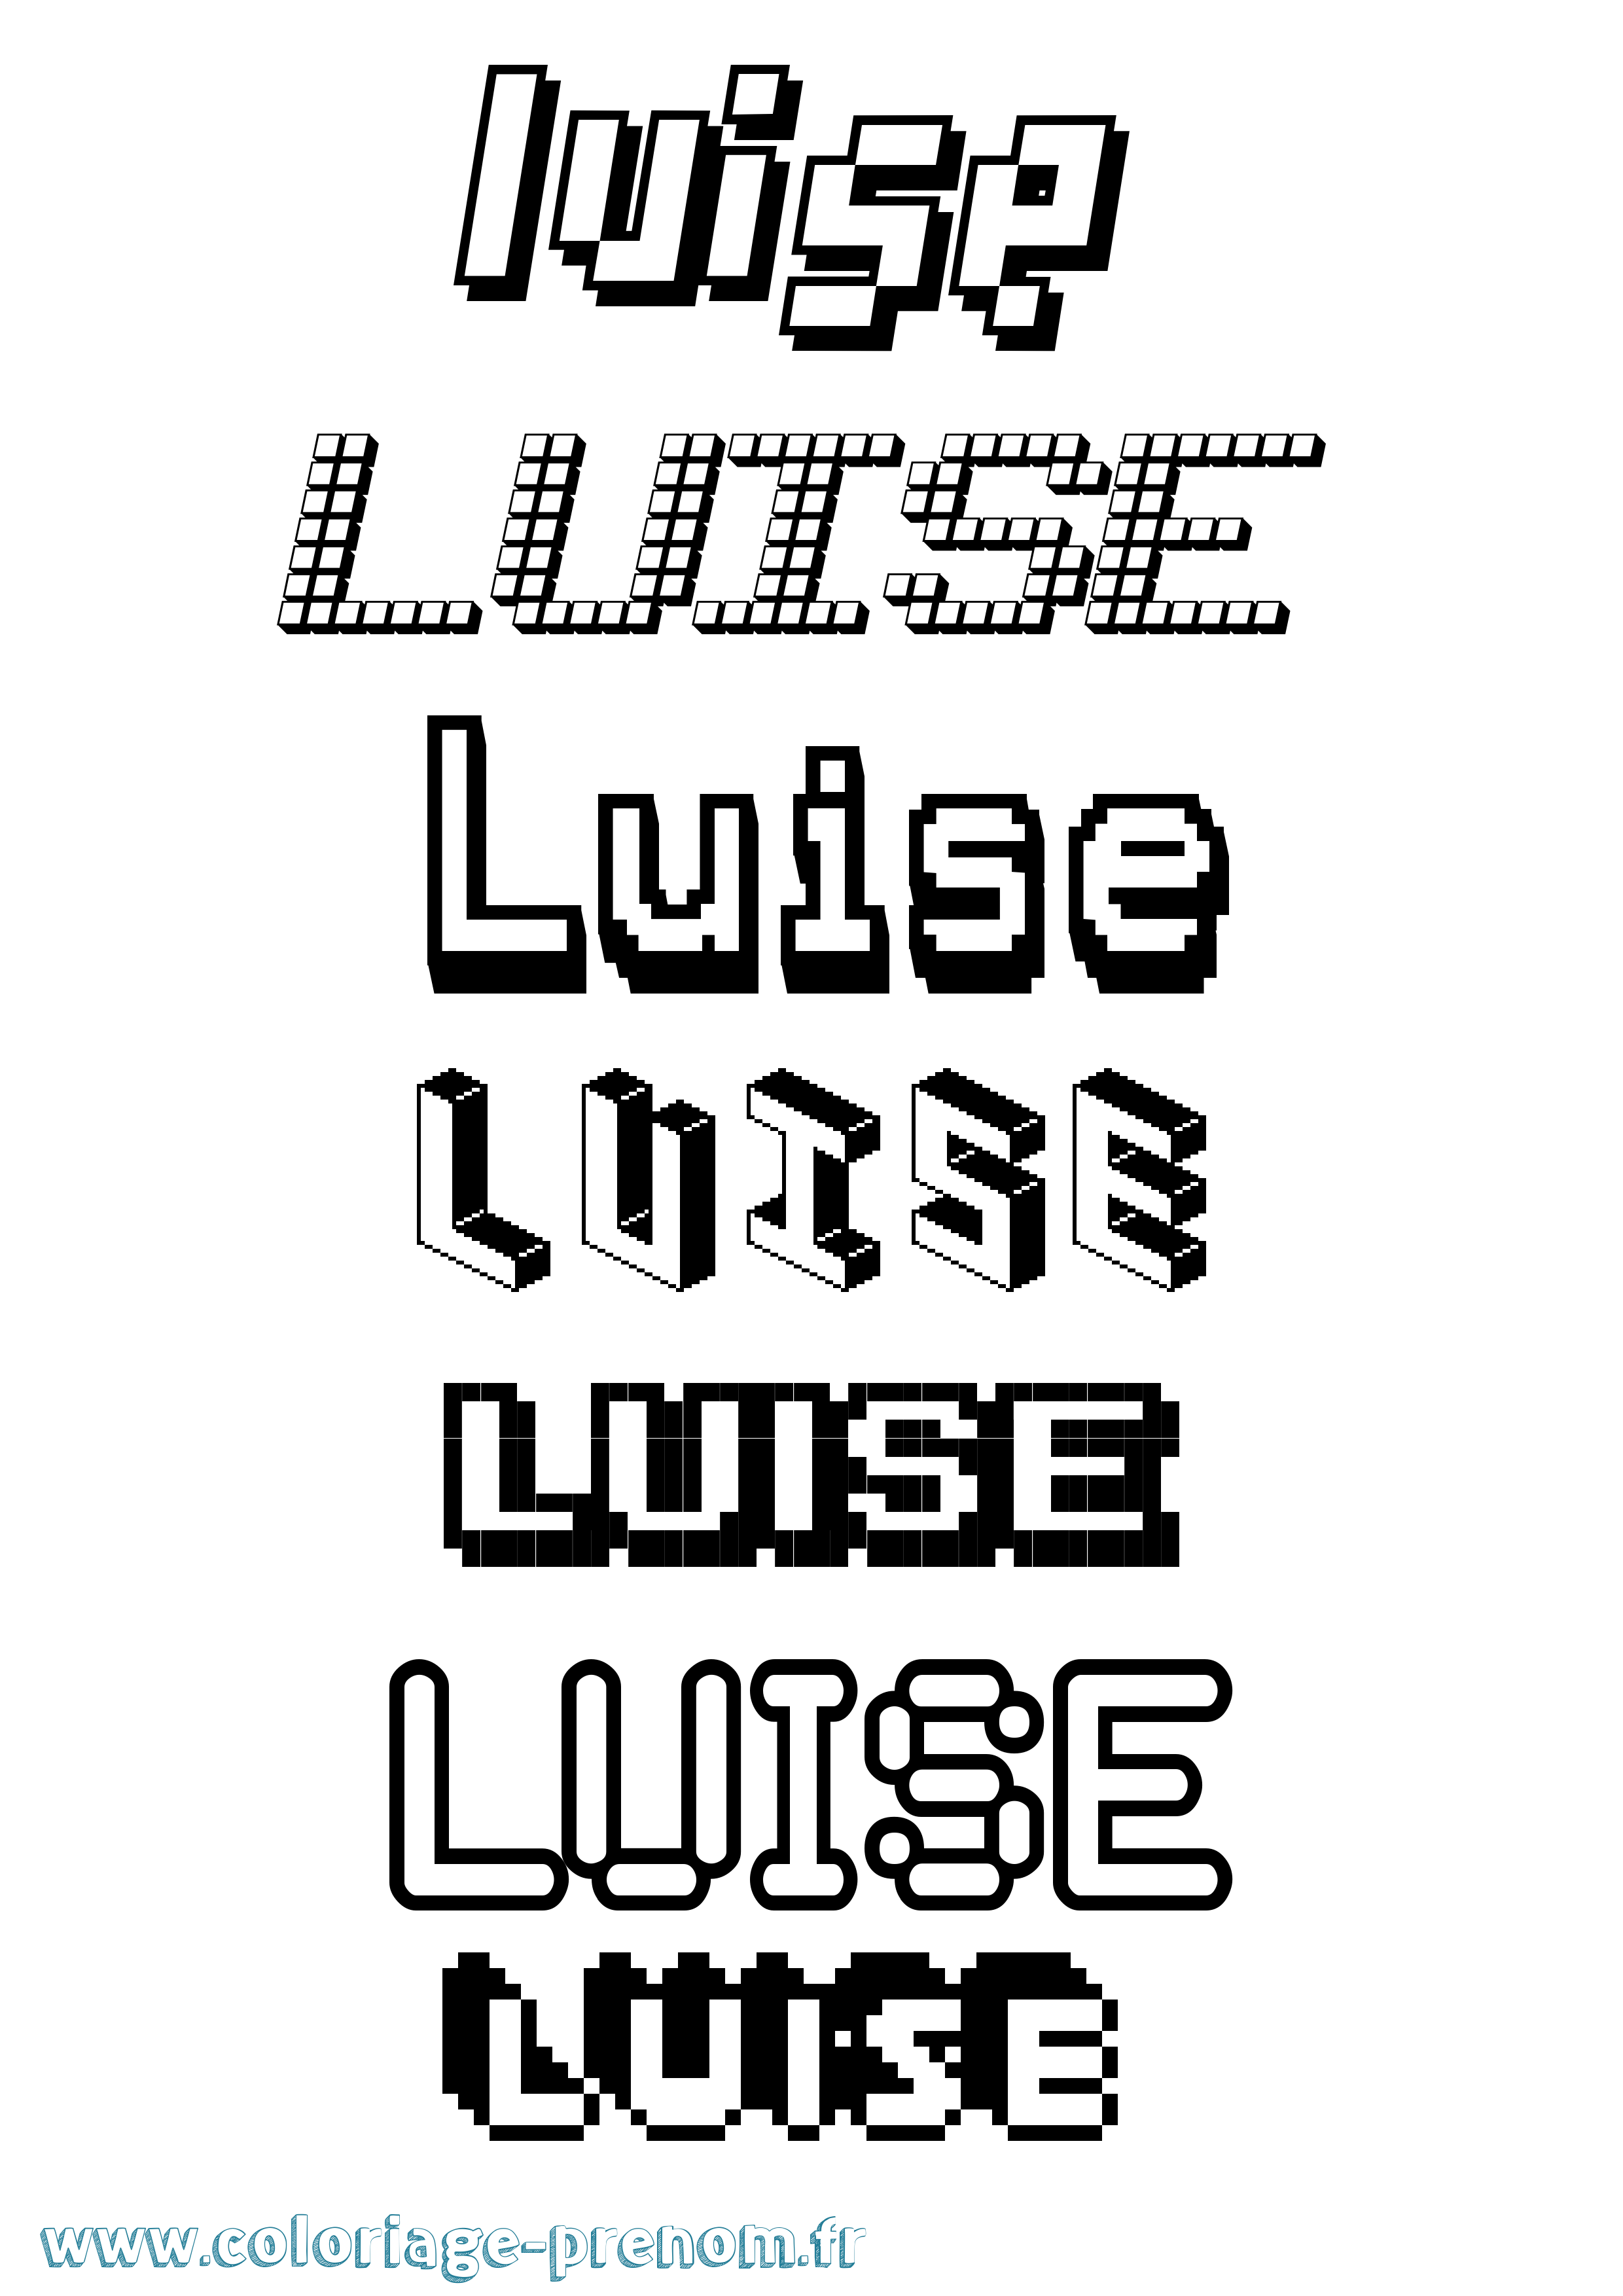 Coloriage prénom Luise Pixel